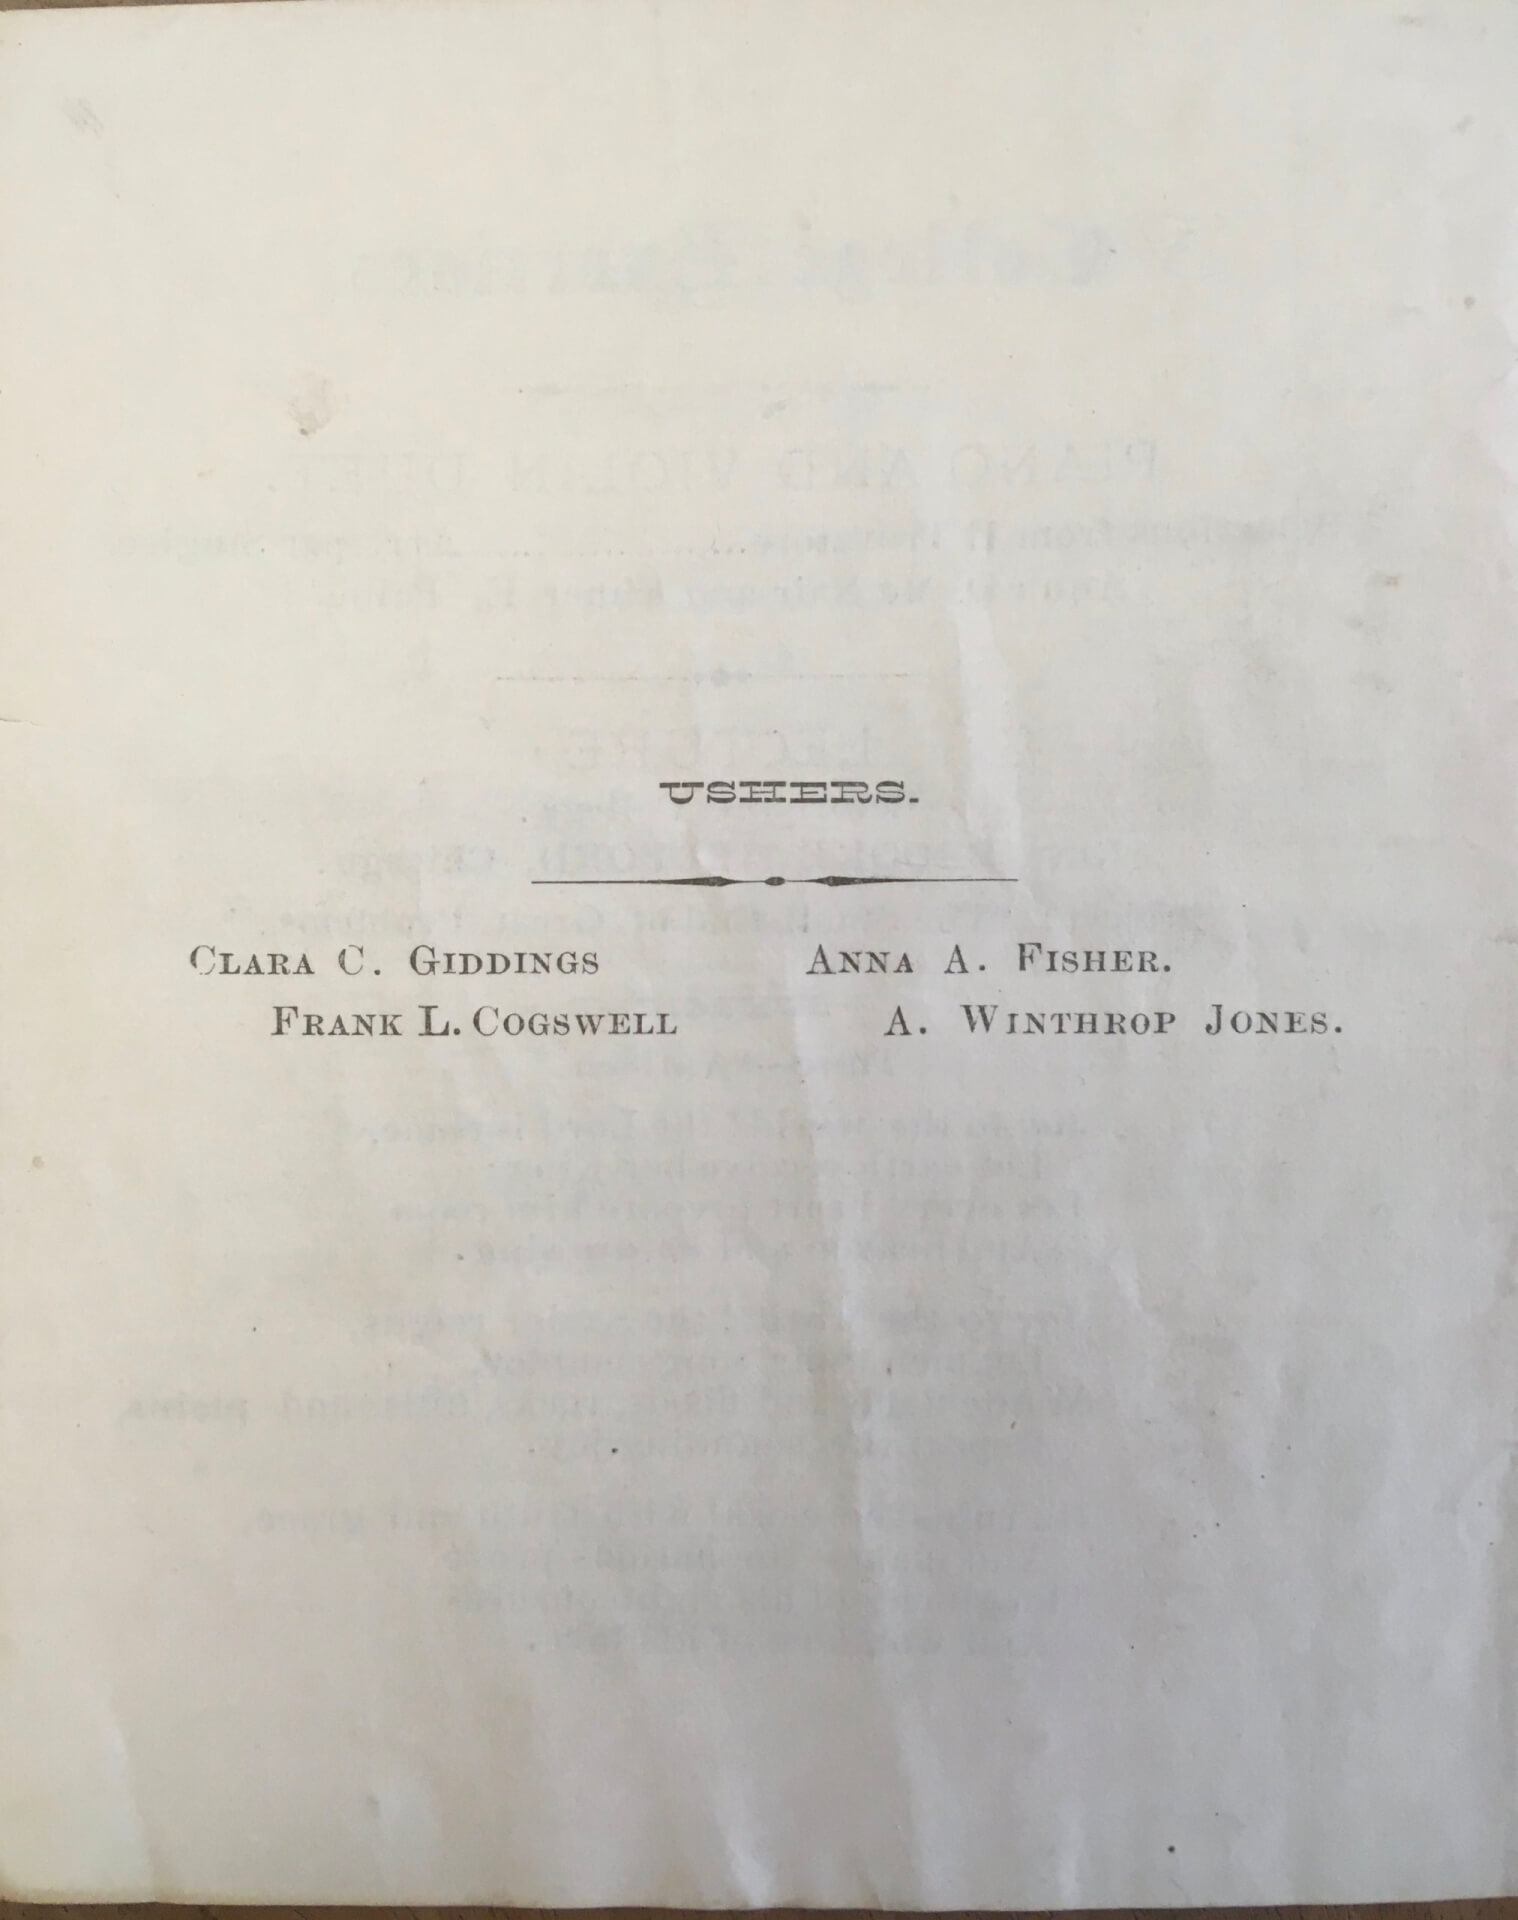 Commencement program from 1880 back cover listing ushers